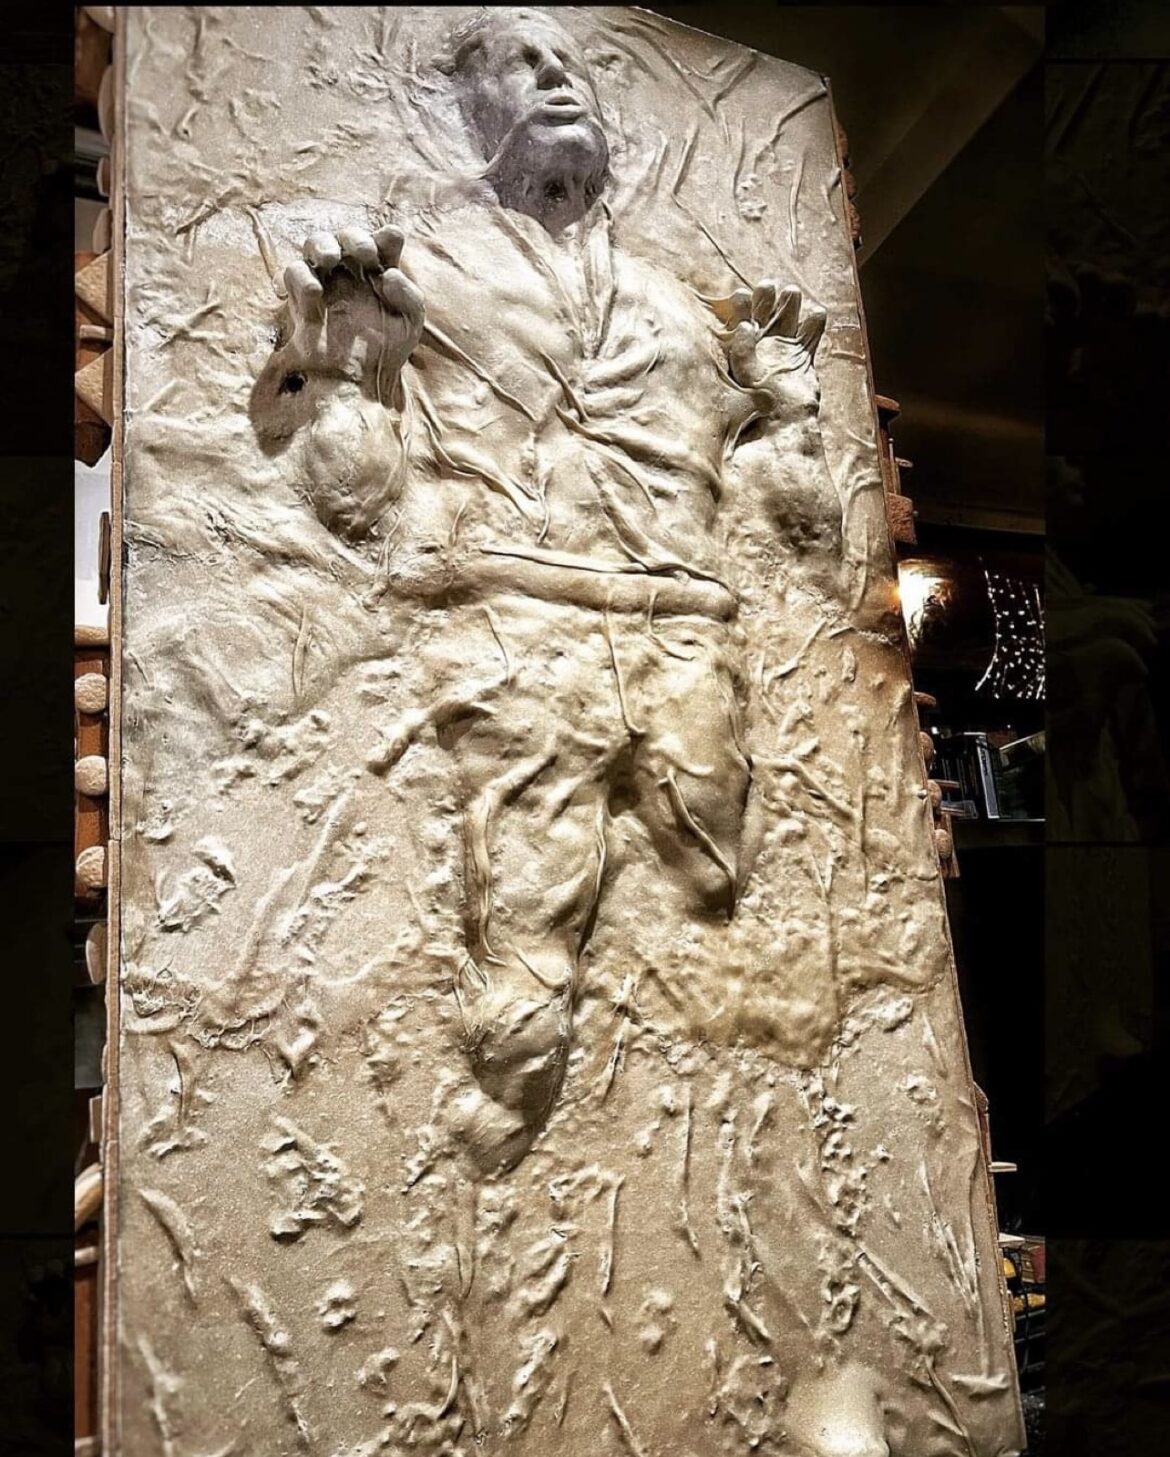 Bakery creates 6-foot bread sculpture of Han Solo frozen in carbonite